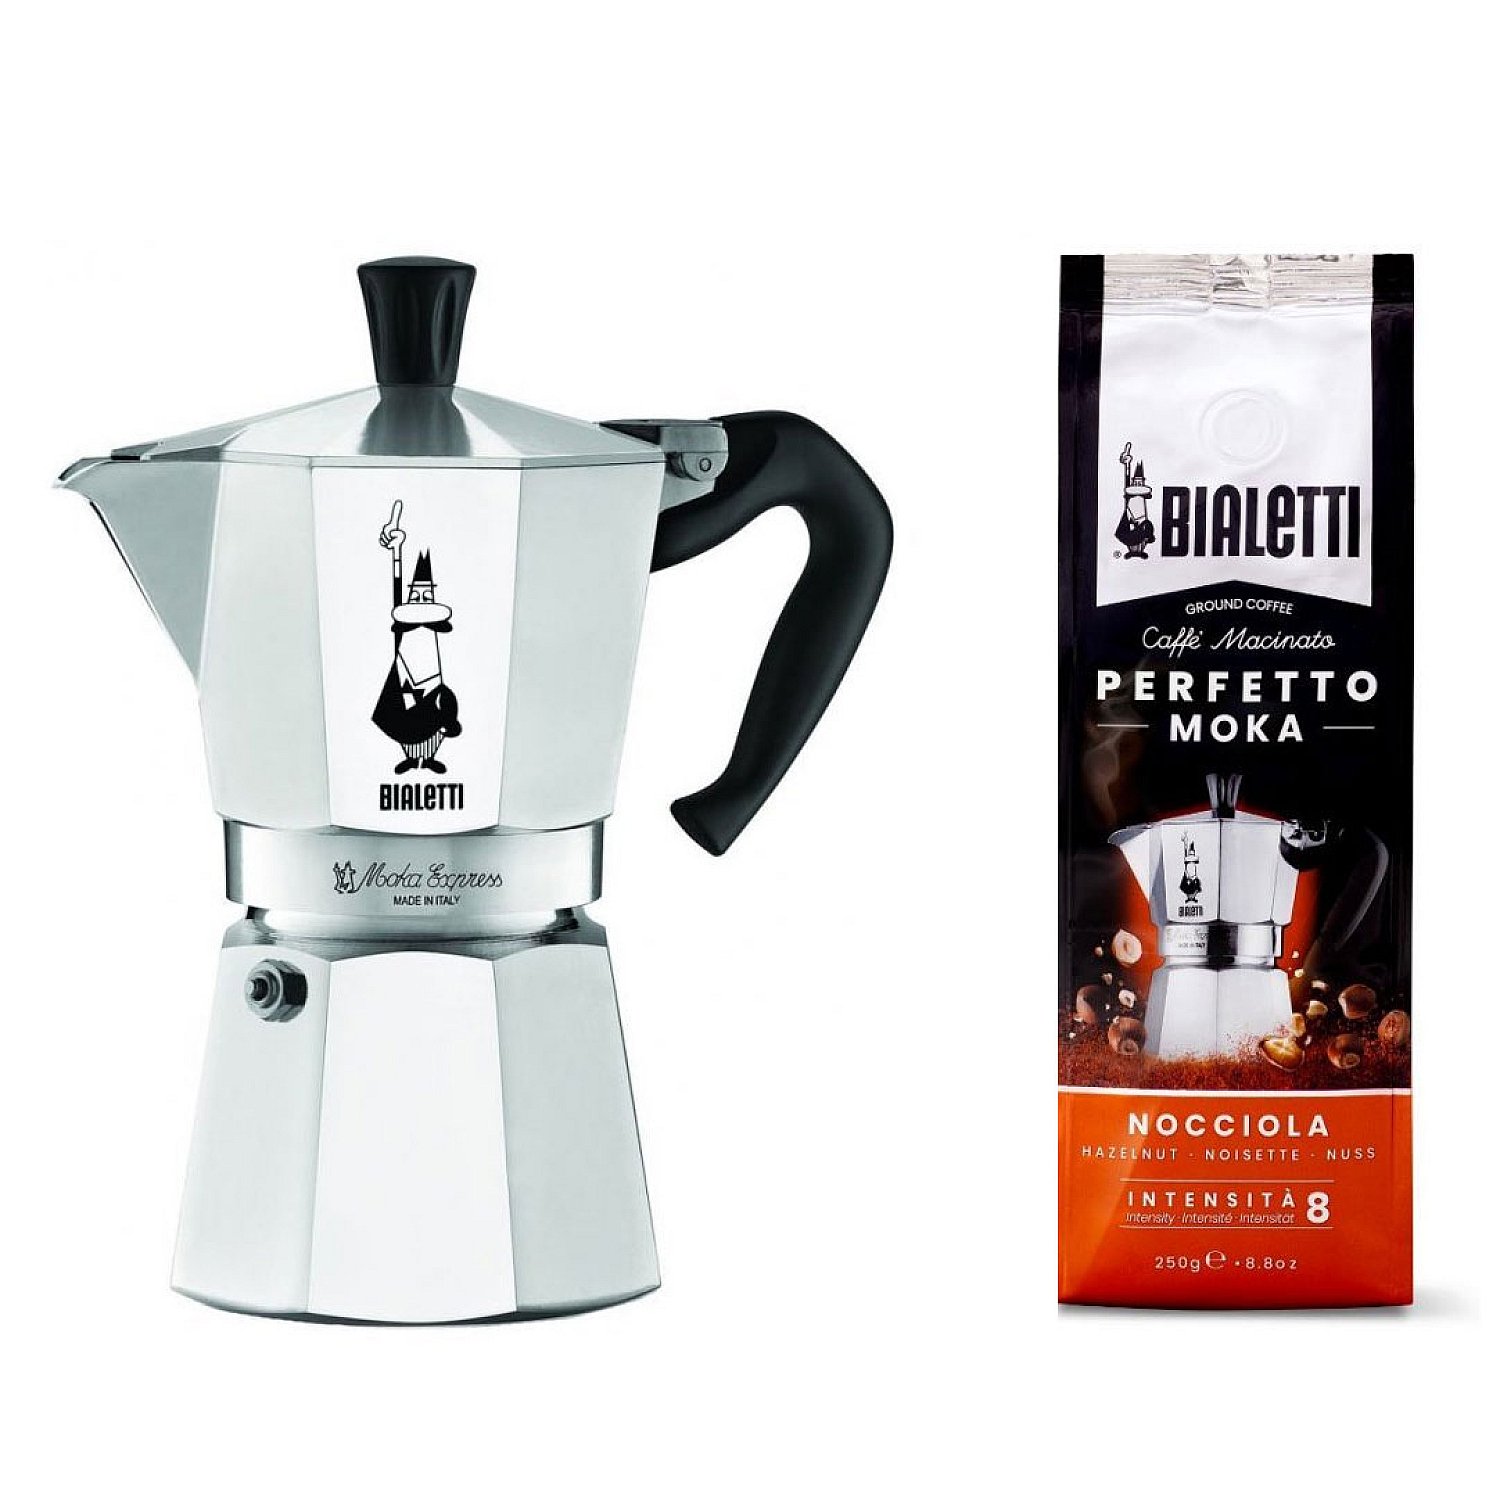 Bialetti Moka Express 6 cups - Wide range of Bialetti Products.